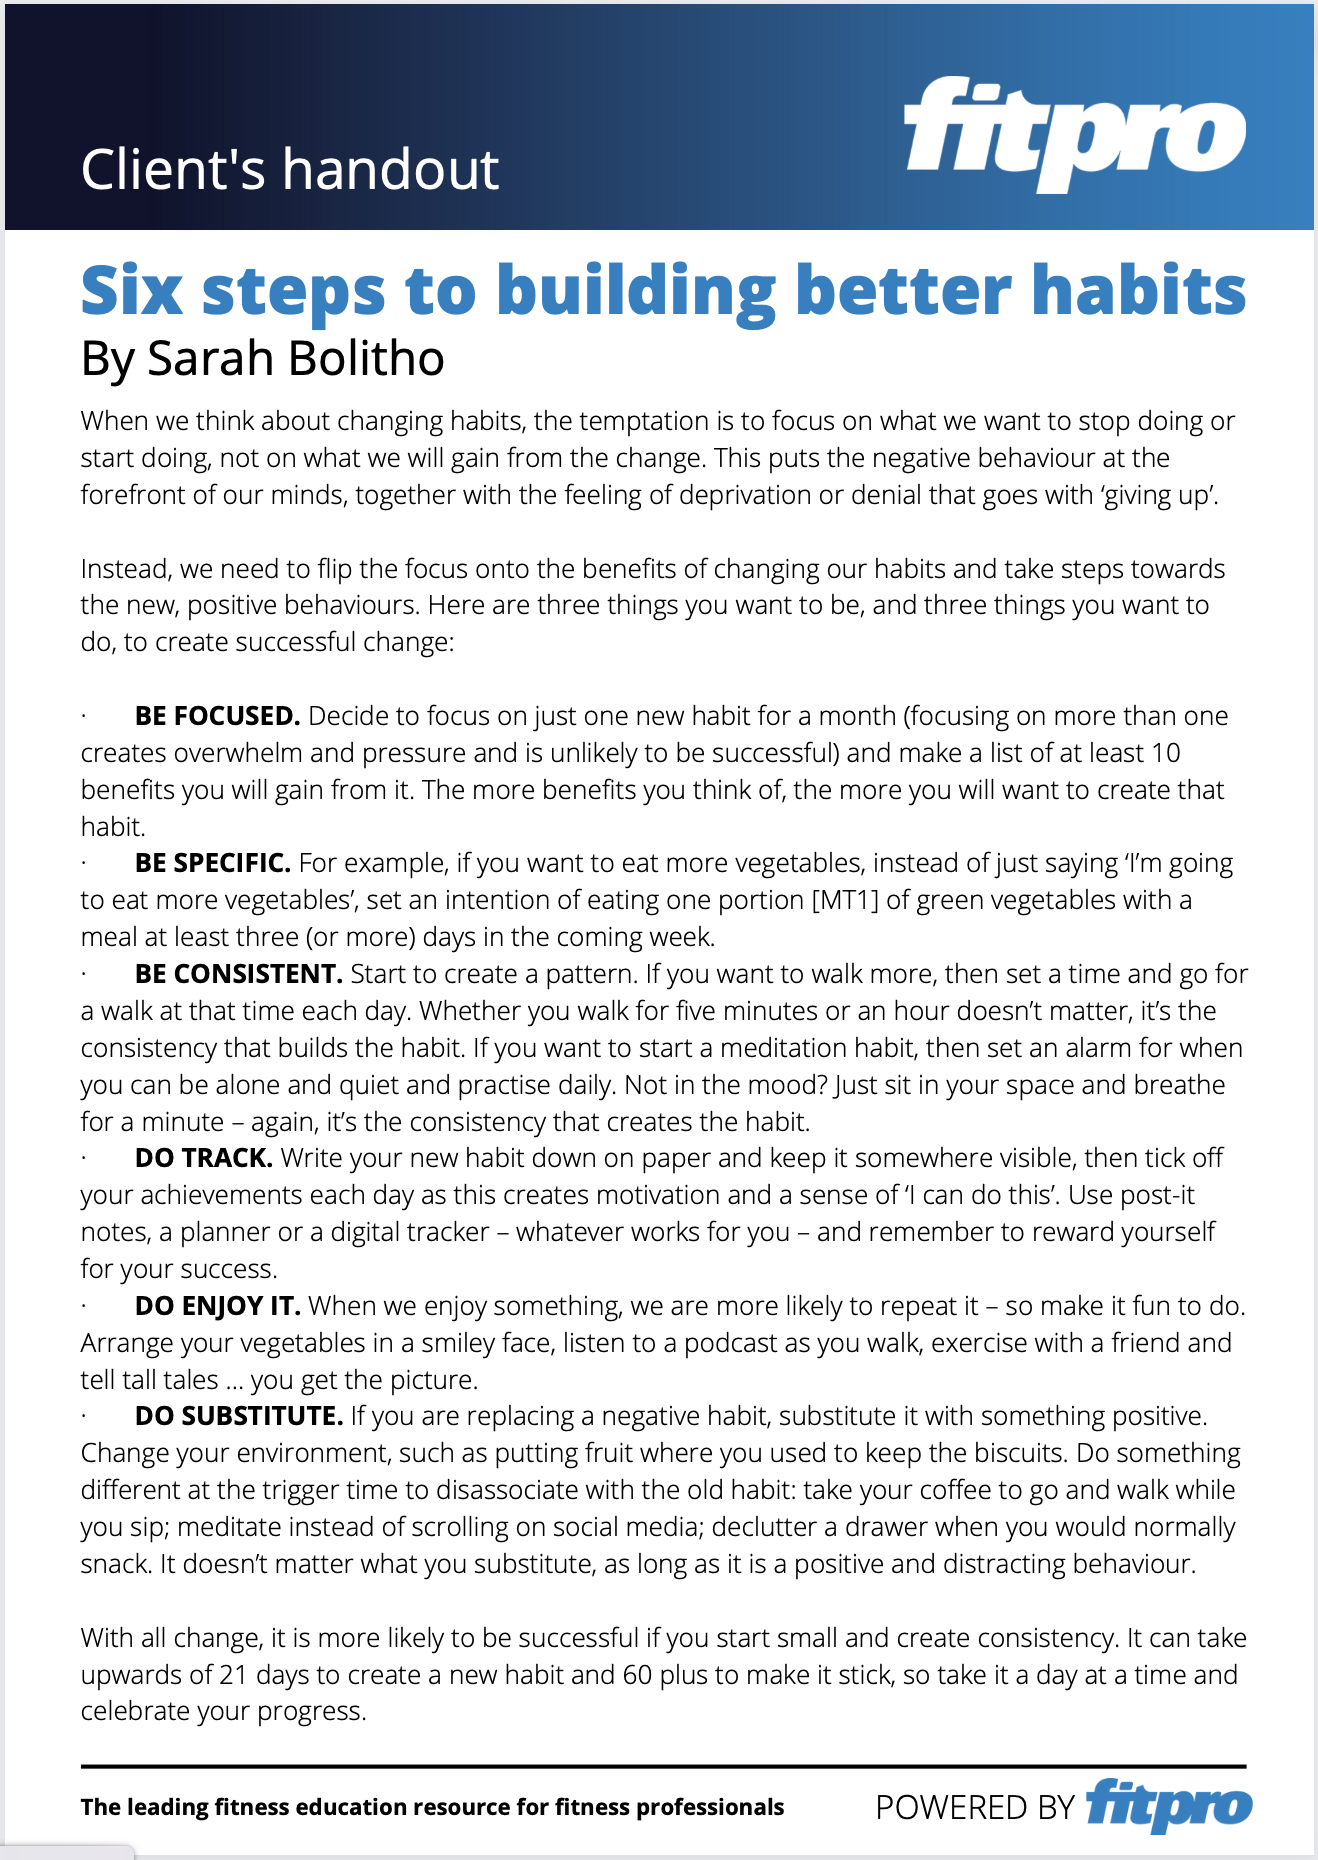 Better habits - Image of FitPro's client handout on setting better habits